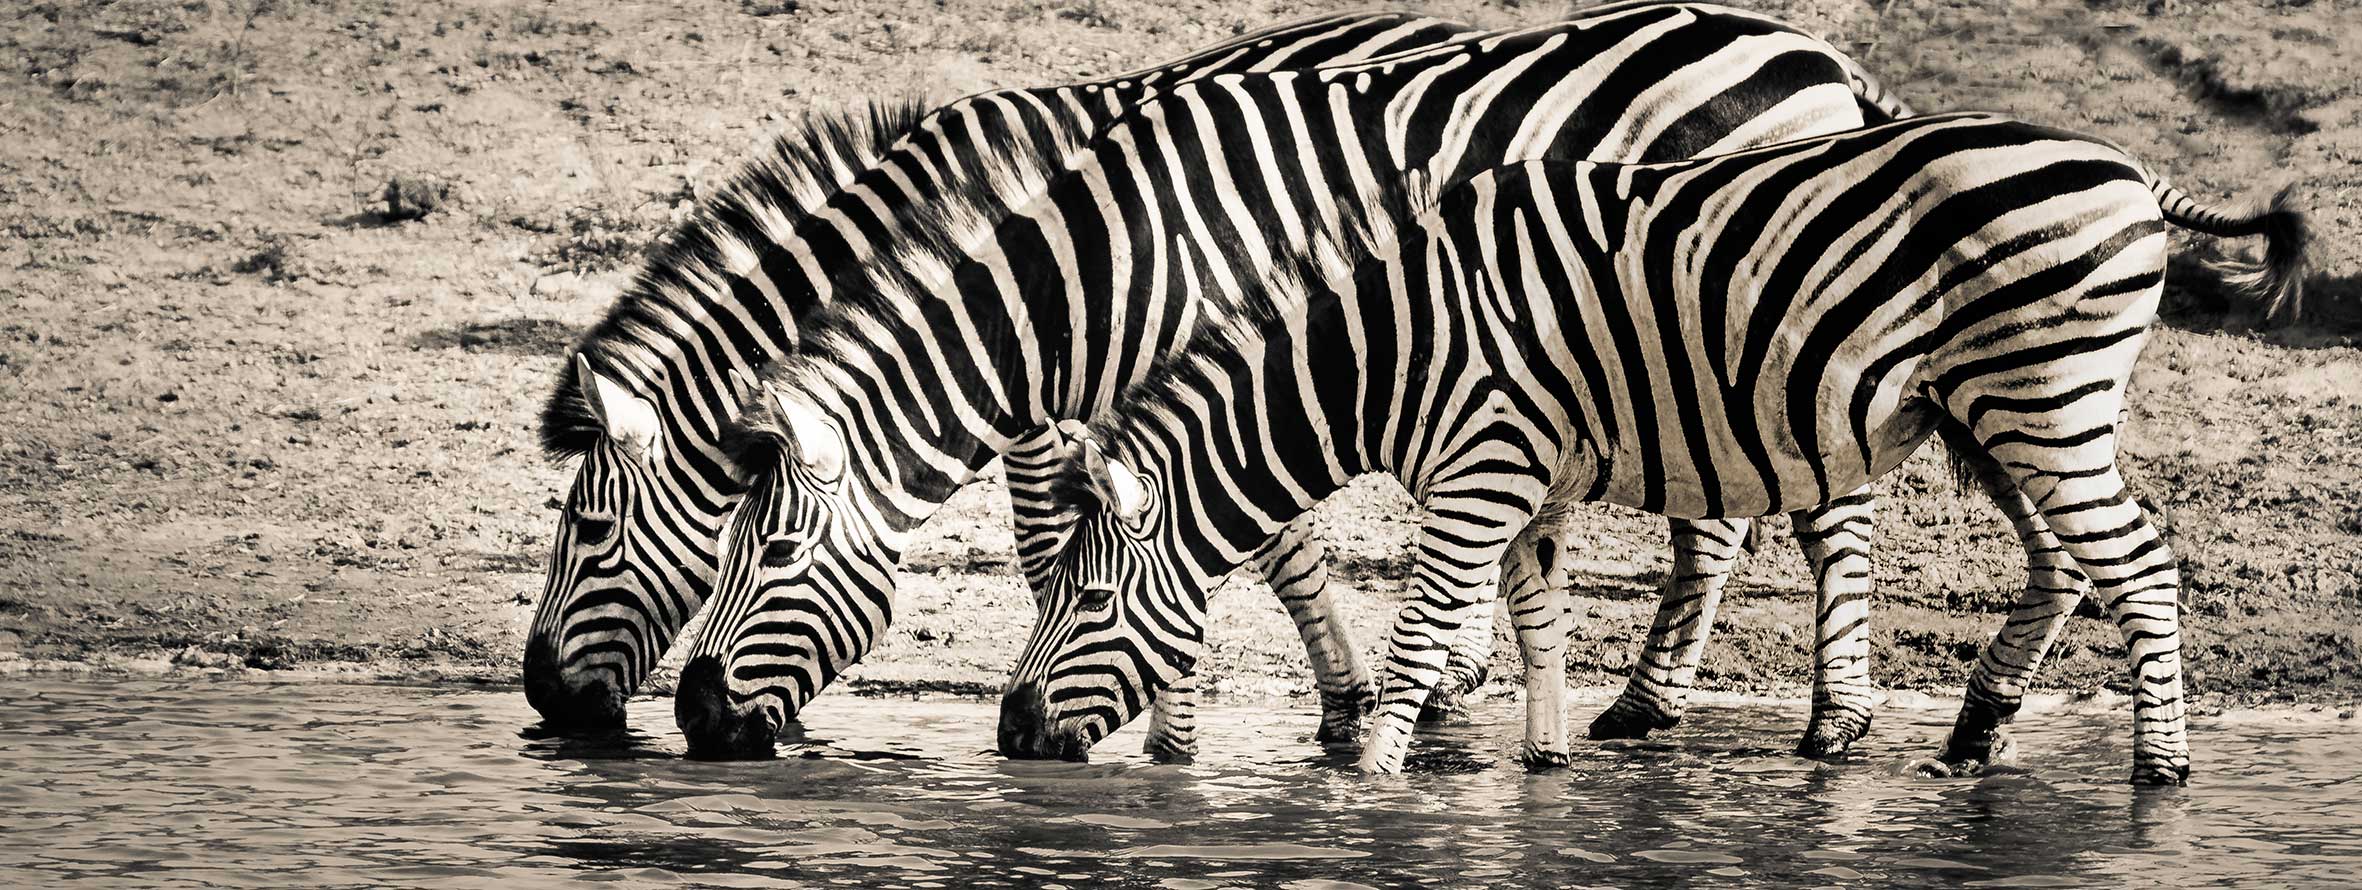 Pintando zebras bebendo